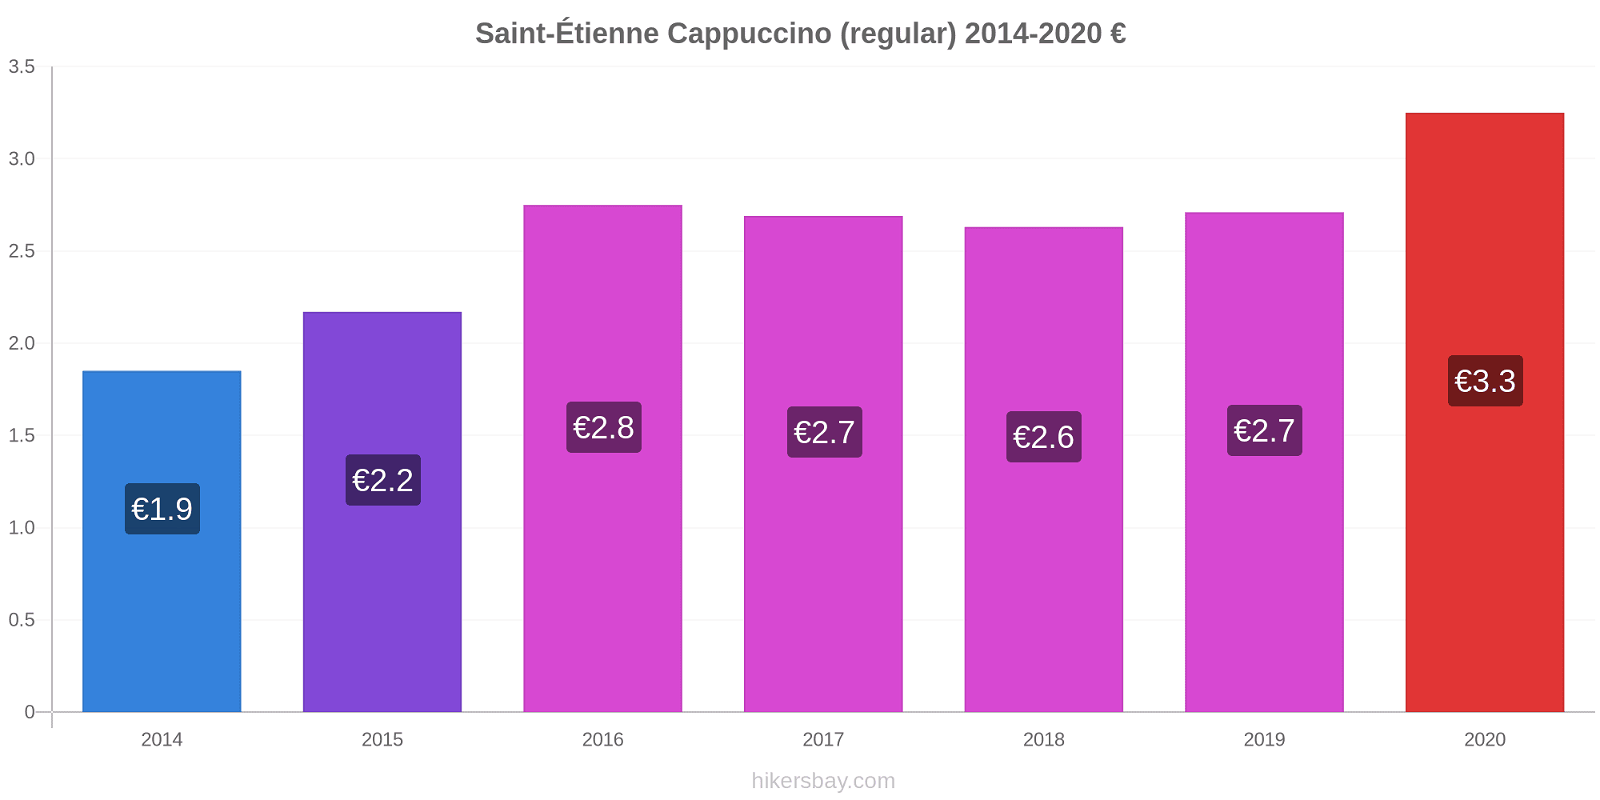 Saint-Étienne price changes Cappuccino (regular) hikersbay.com